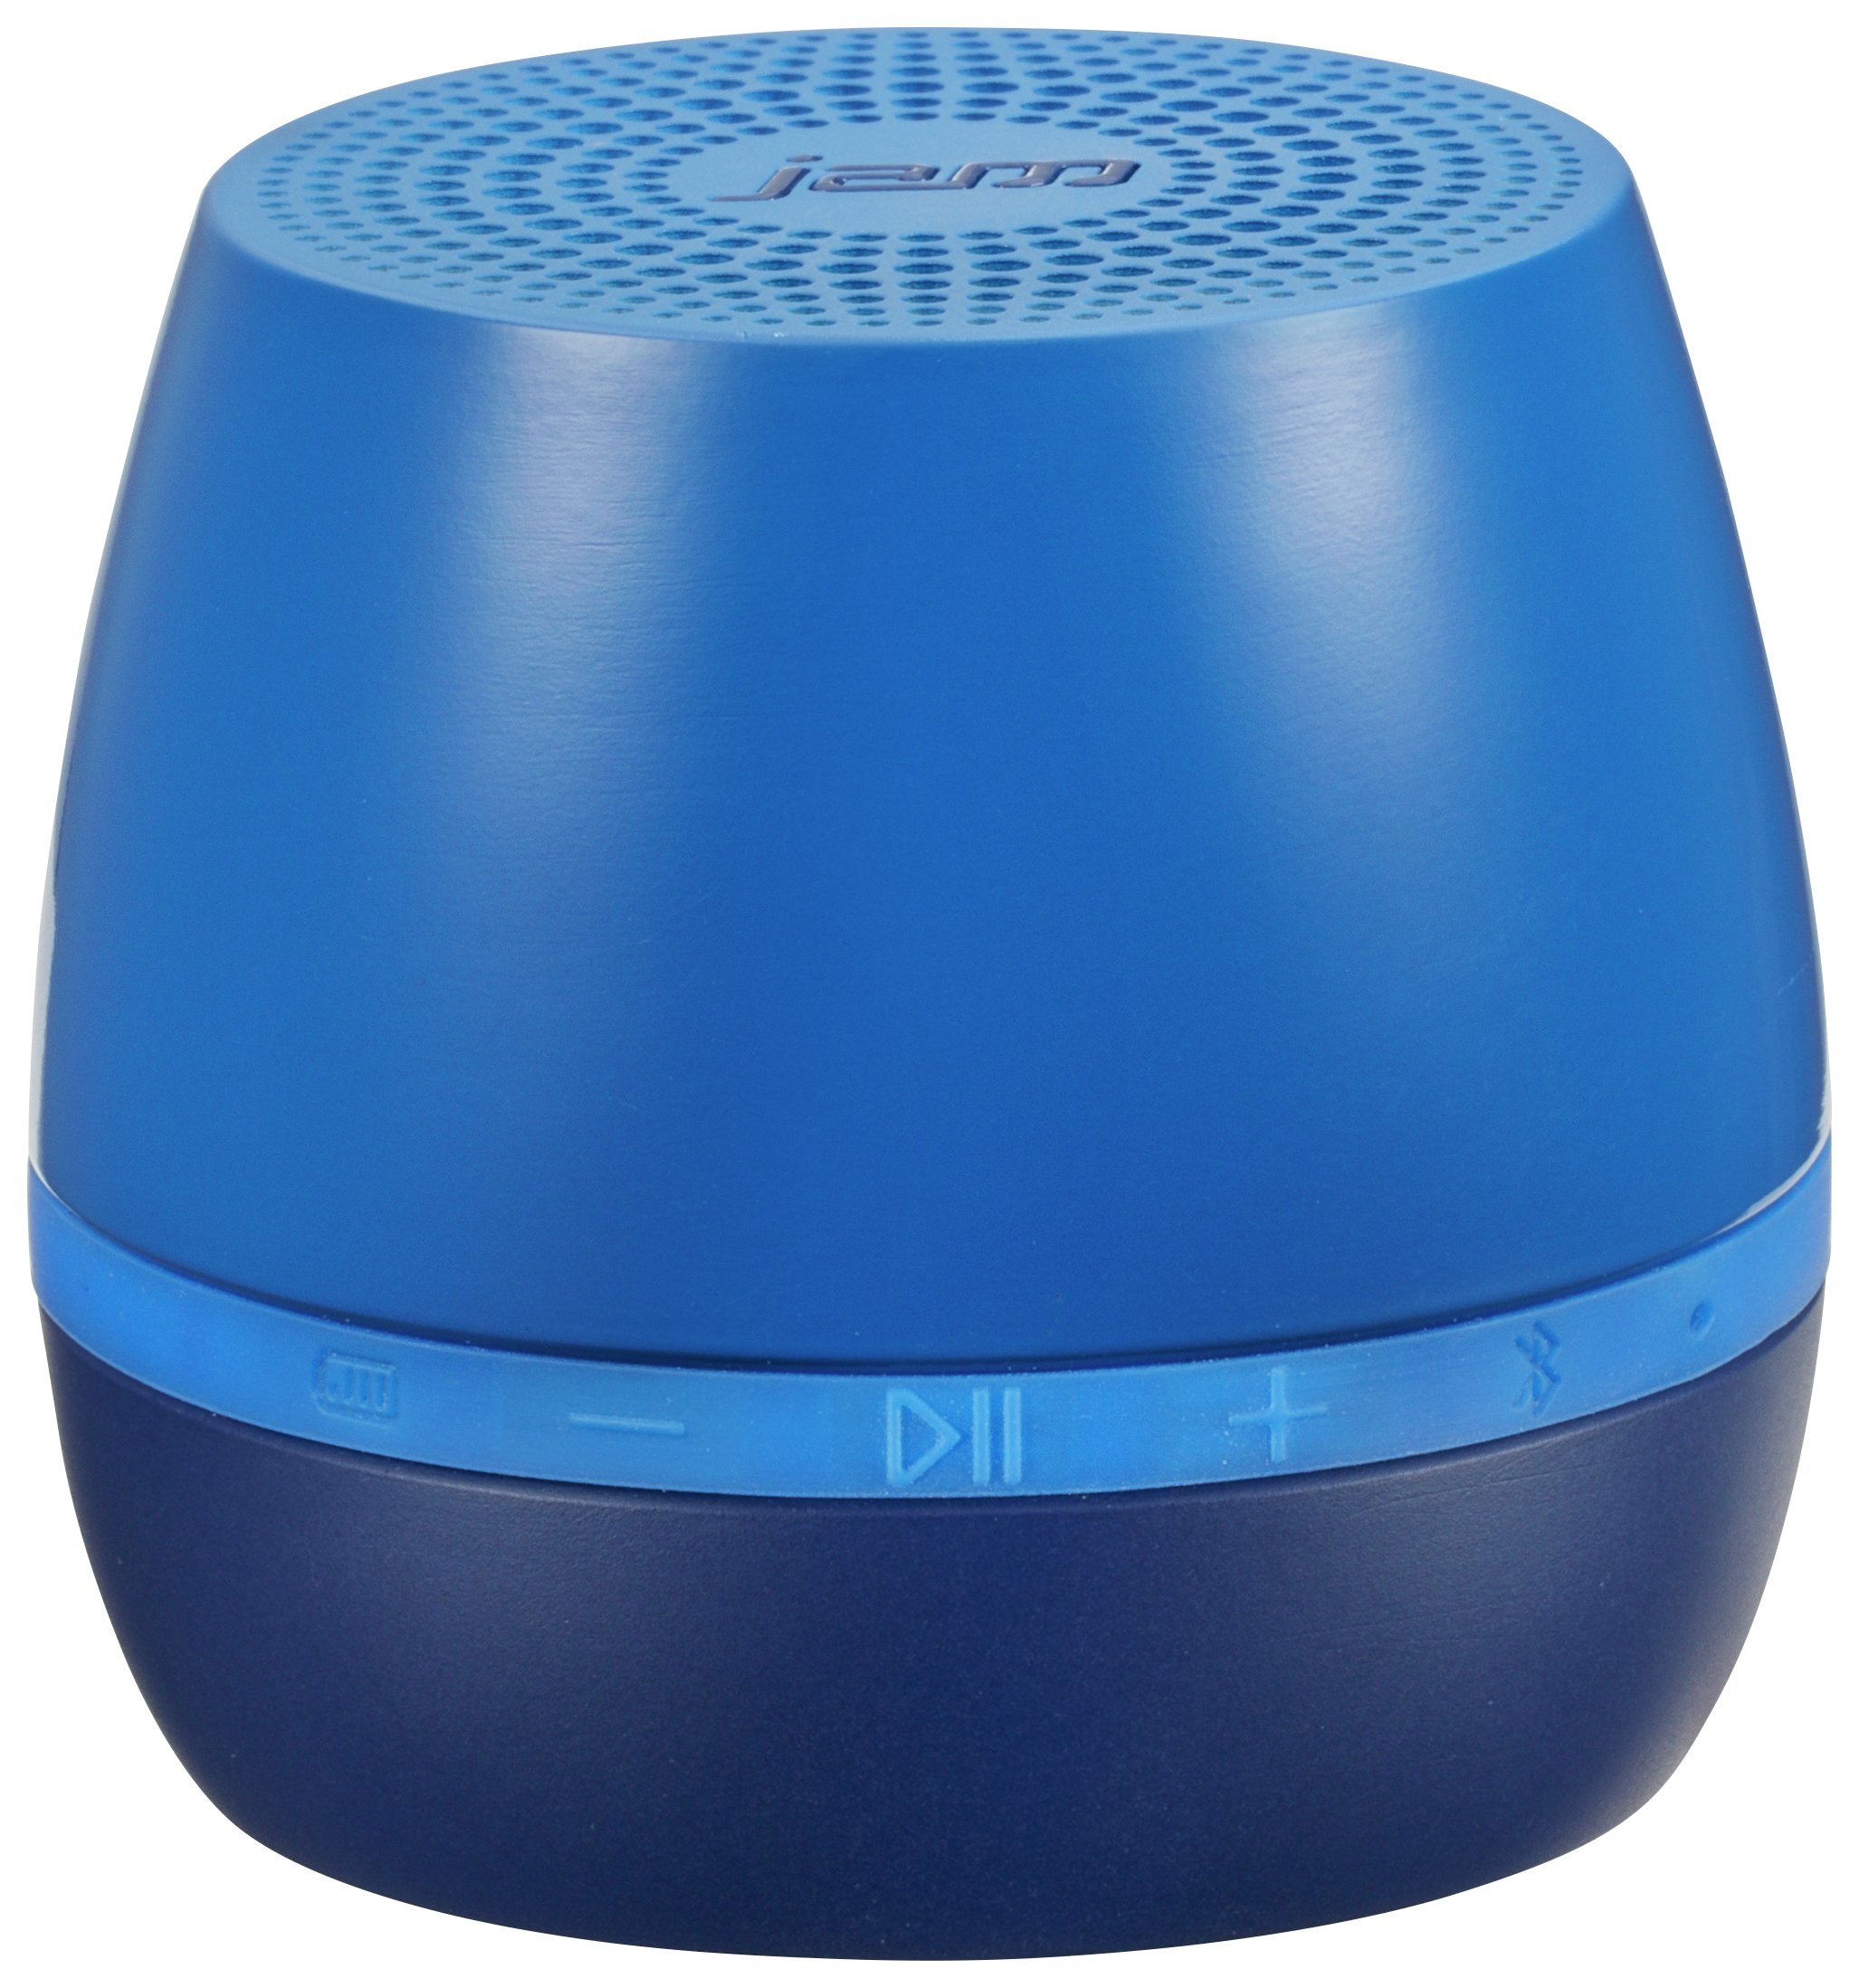 Jam Classic 2.0 Portable Wireless Speaker - Blue.